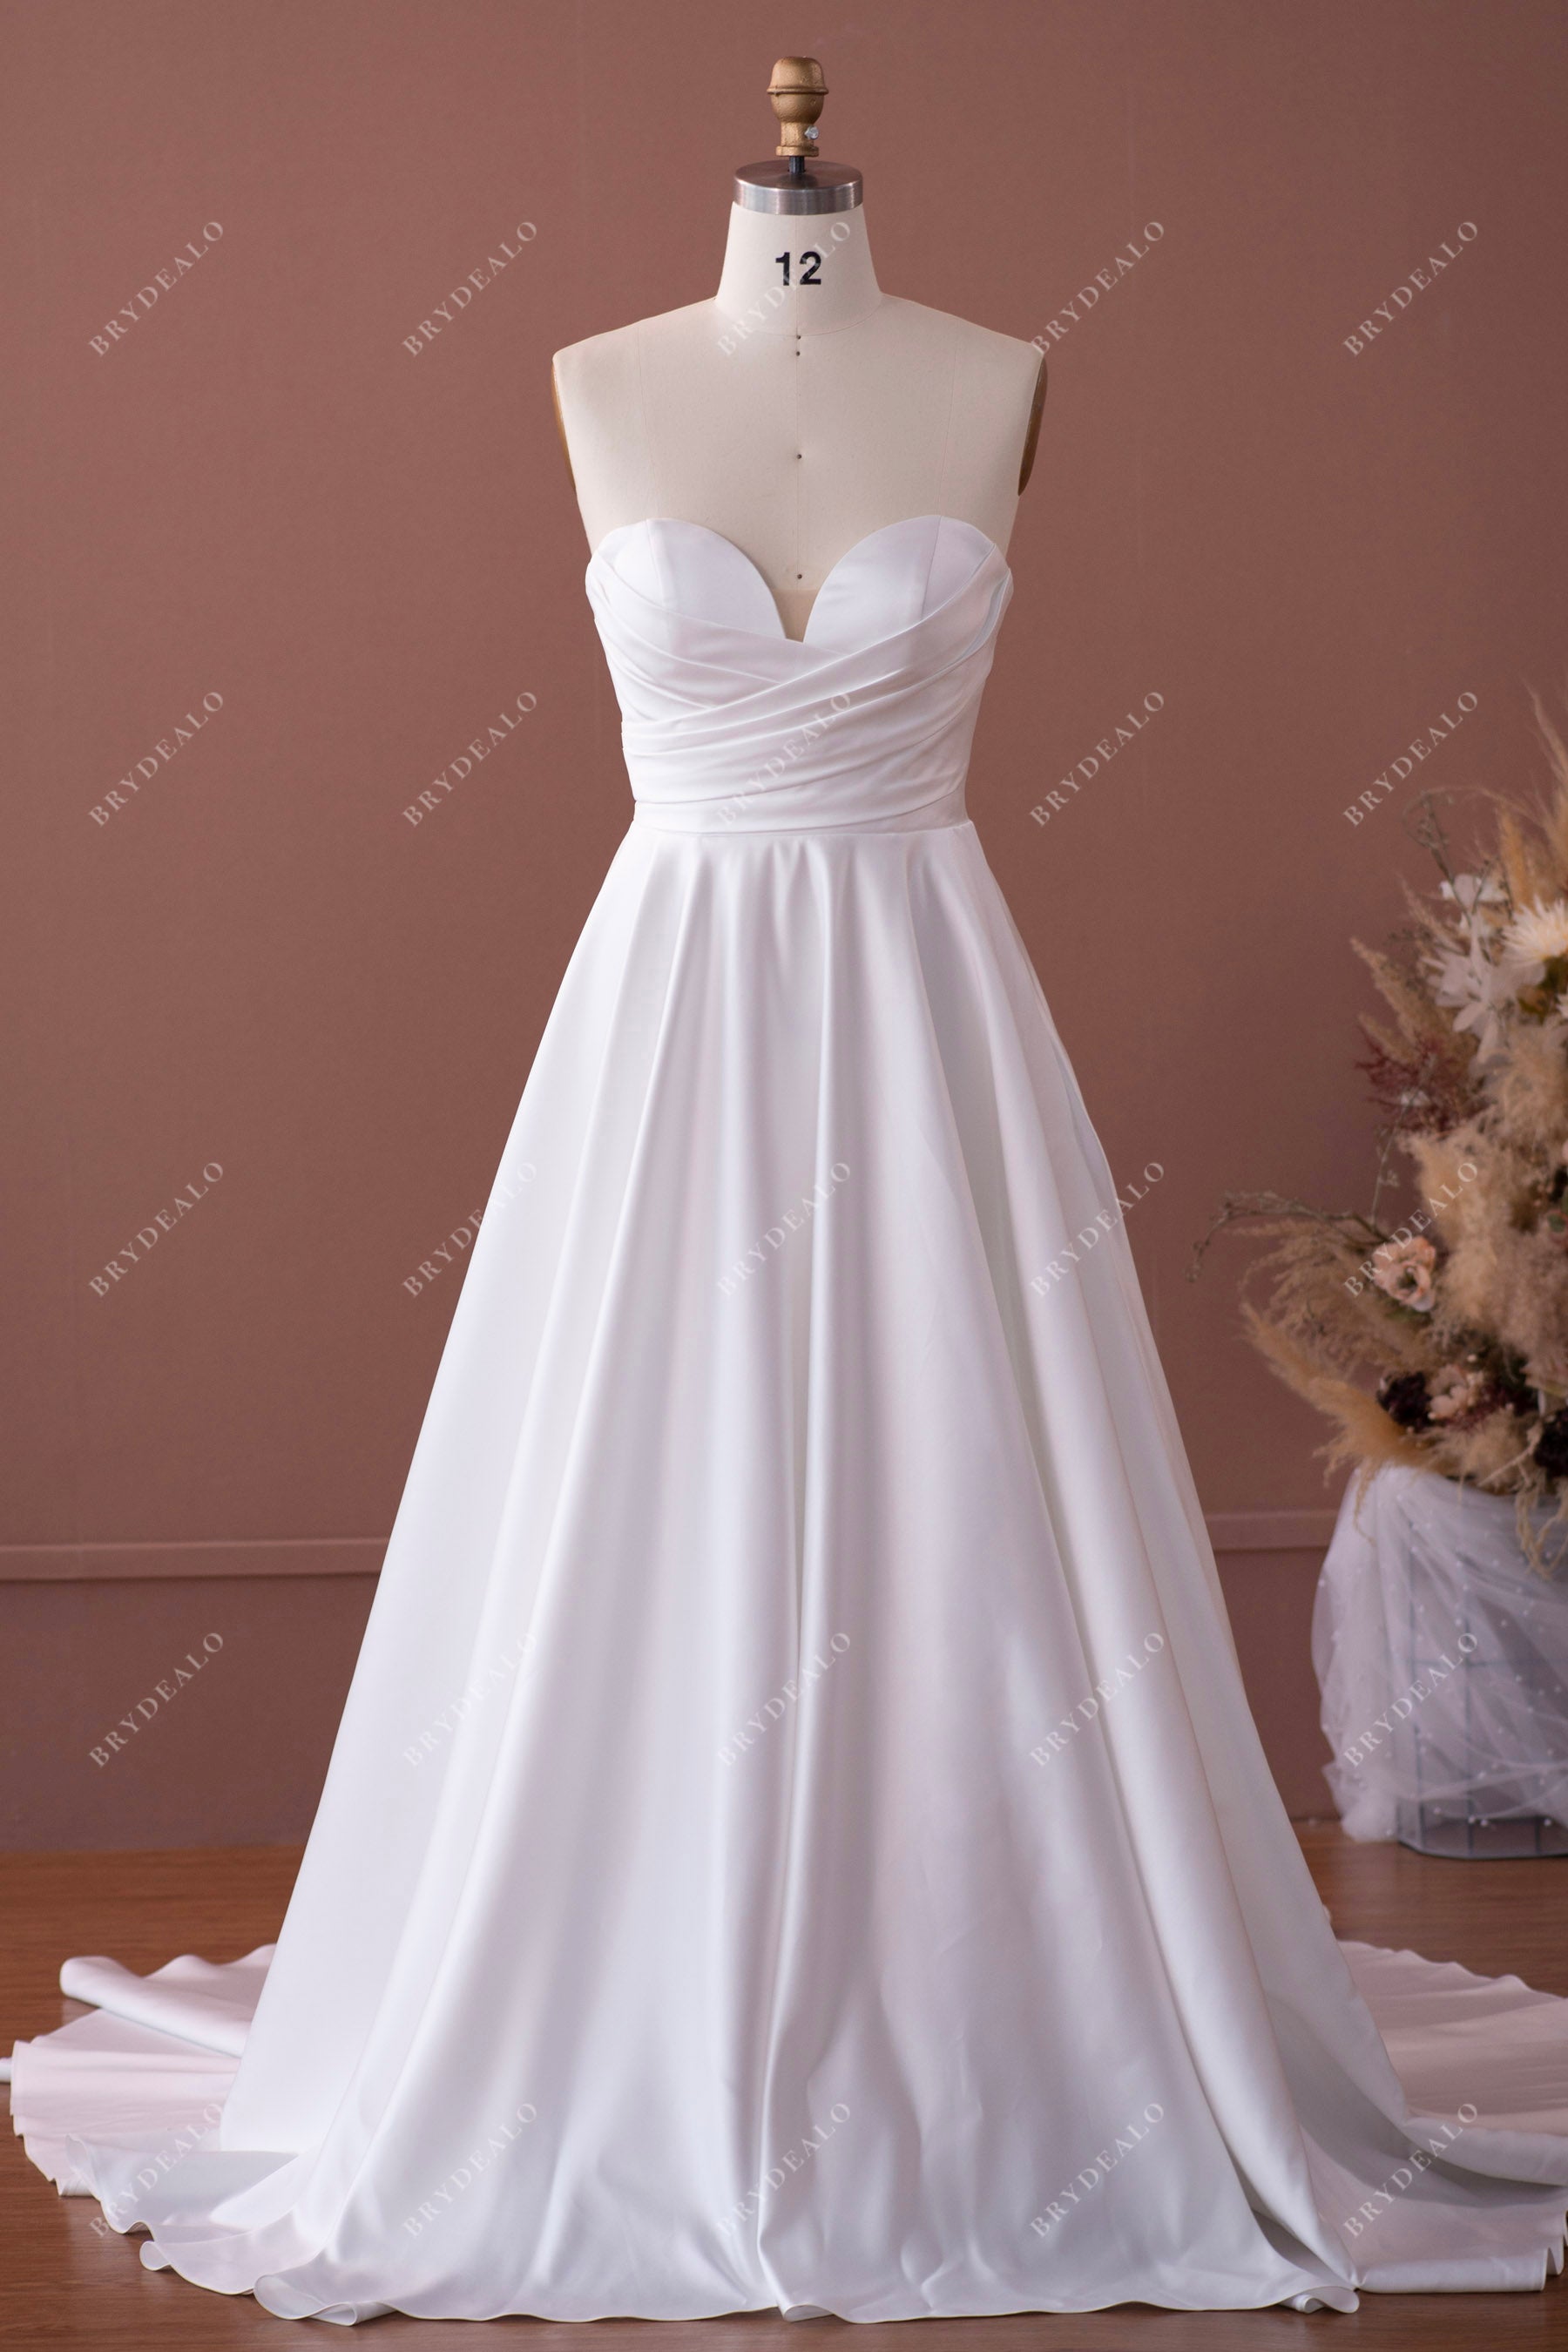 Sweetheart Strapless Satin Wedding Bridesmaid Dress With Pockets